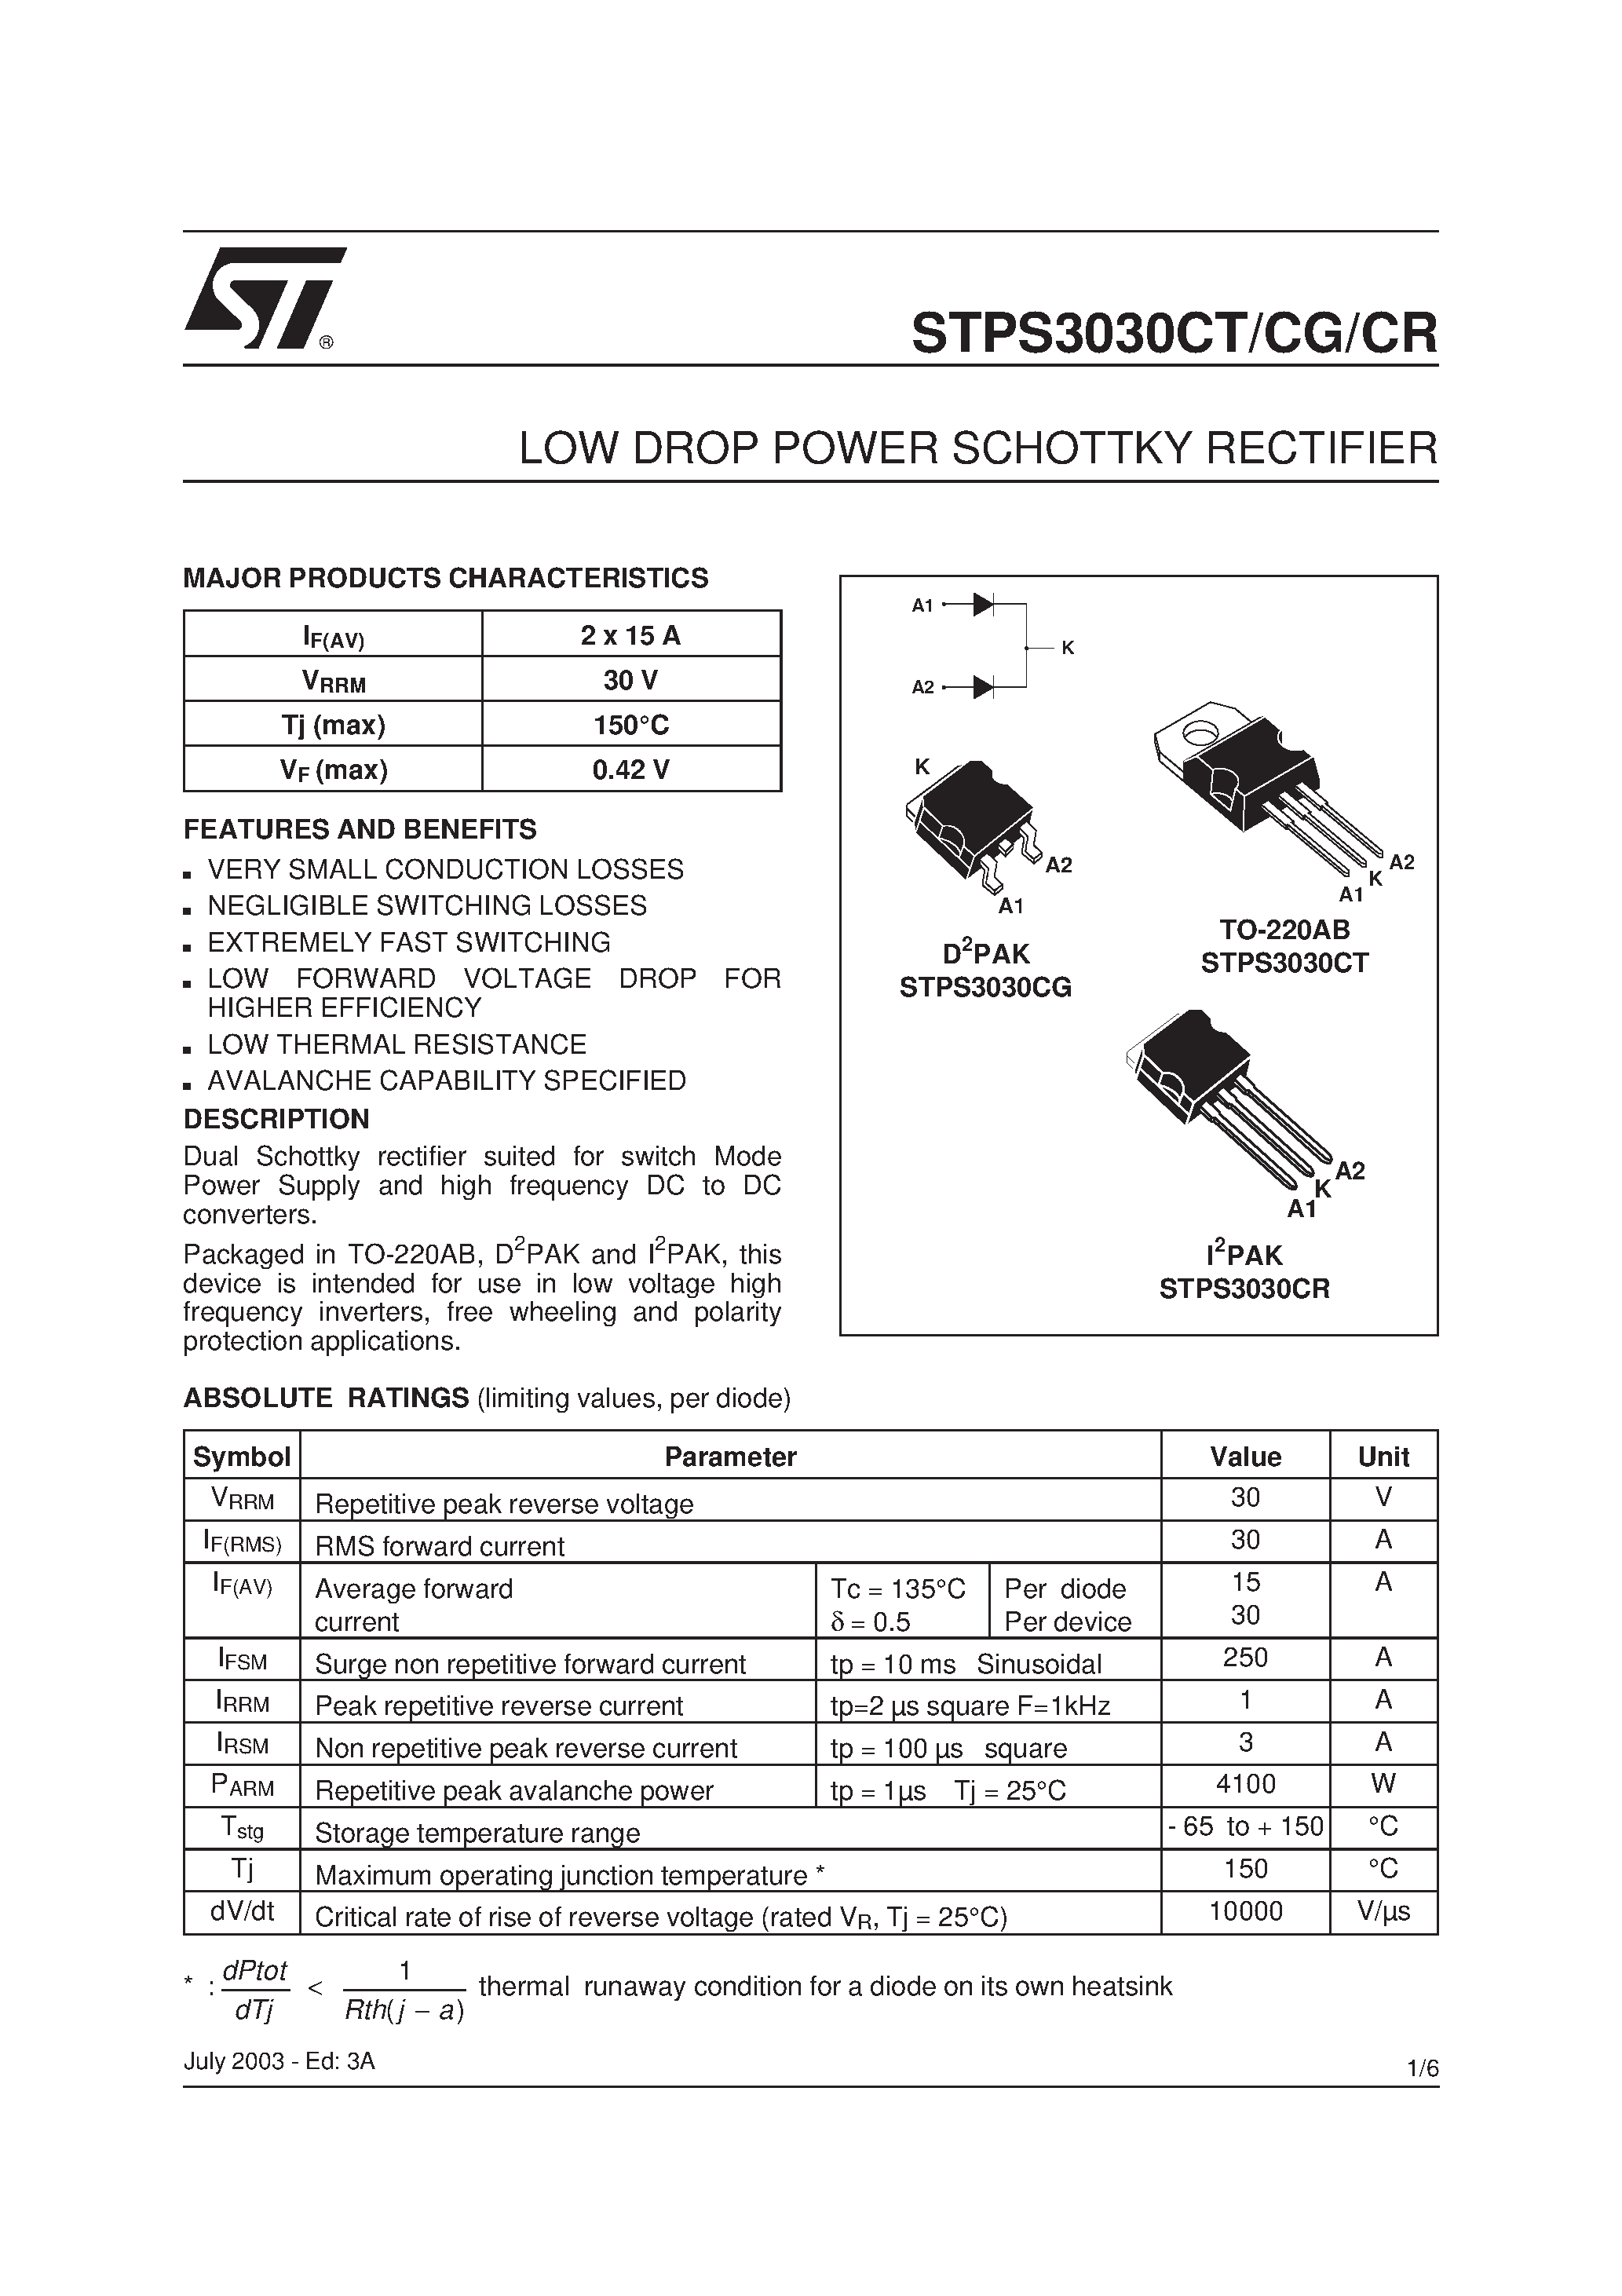 Datasheet STPS3030CG - (STPS3030CT/CG/CR) LOW DROP POWER SCHOTTKY RECTIFIER page 1